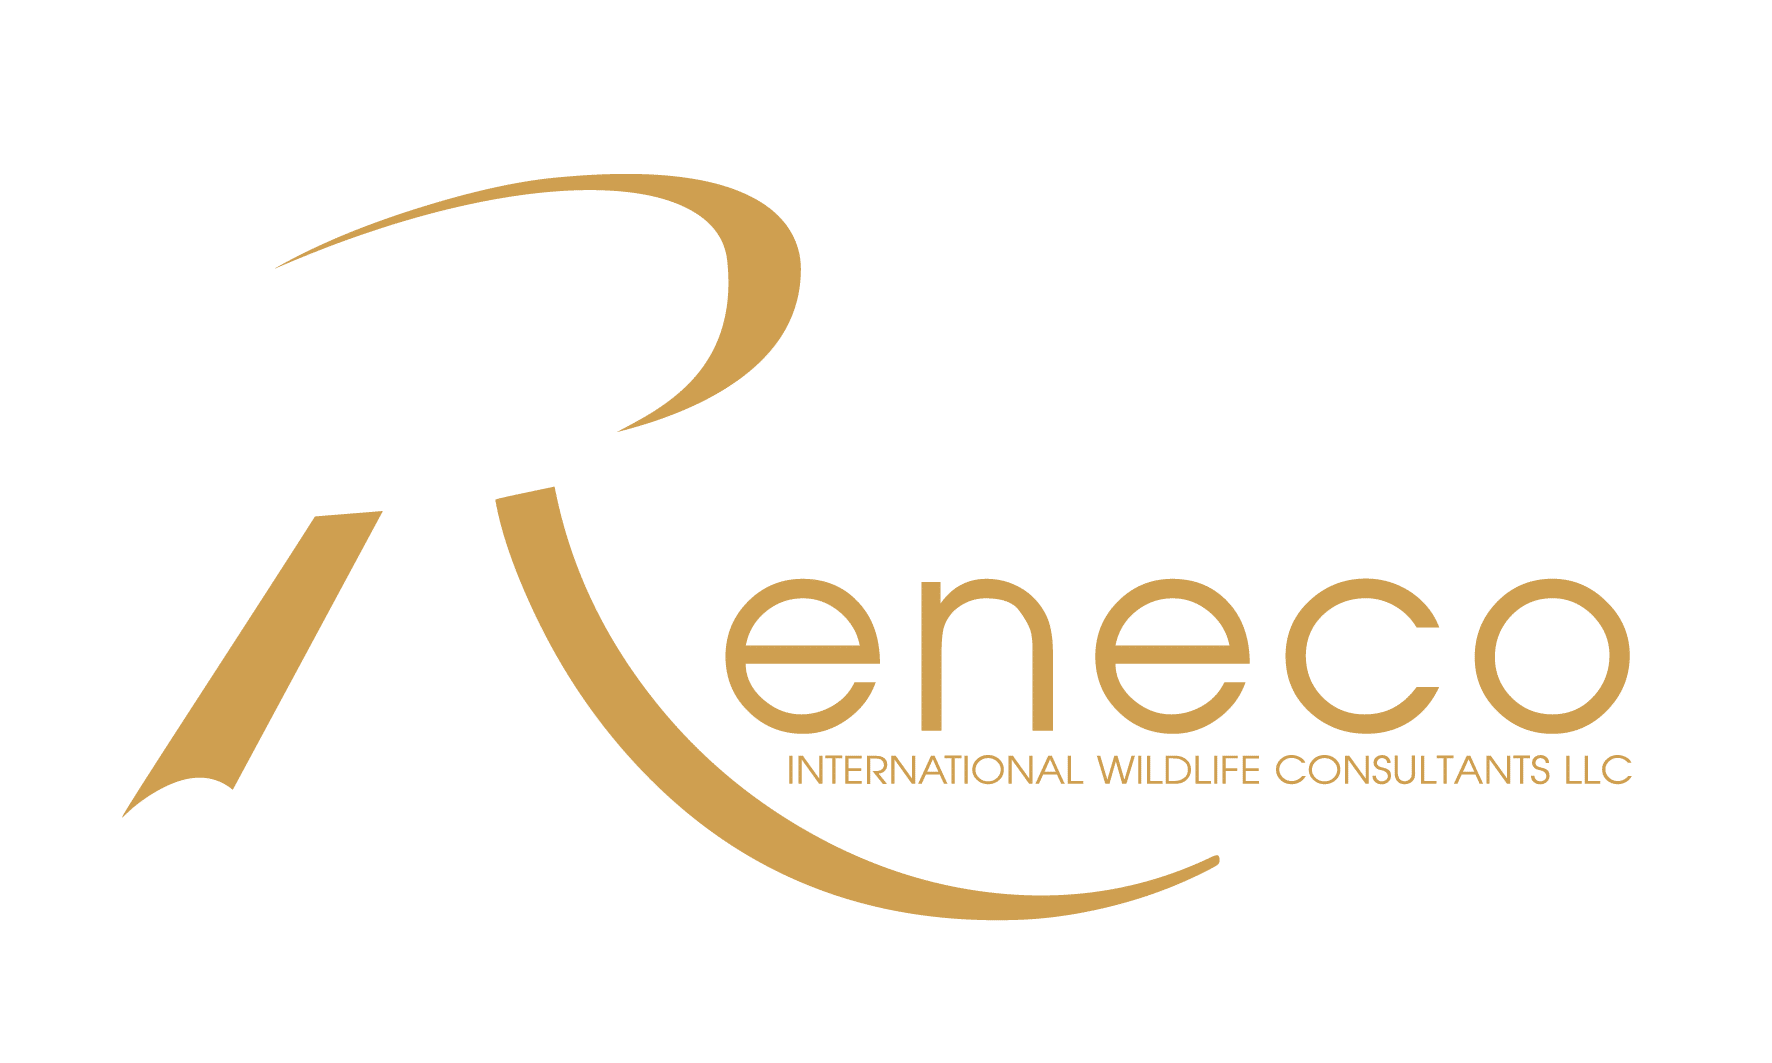 RENECO for Wildlife Preservation